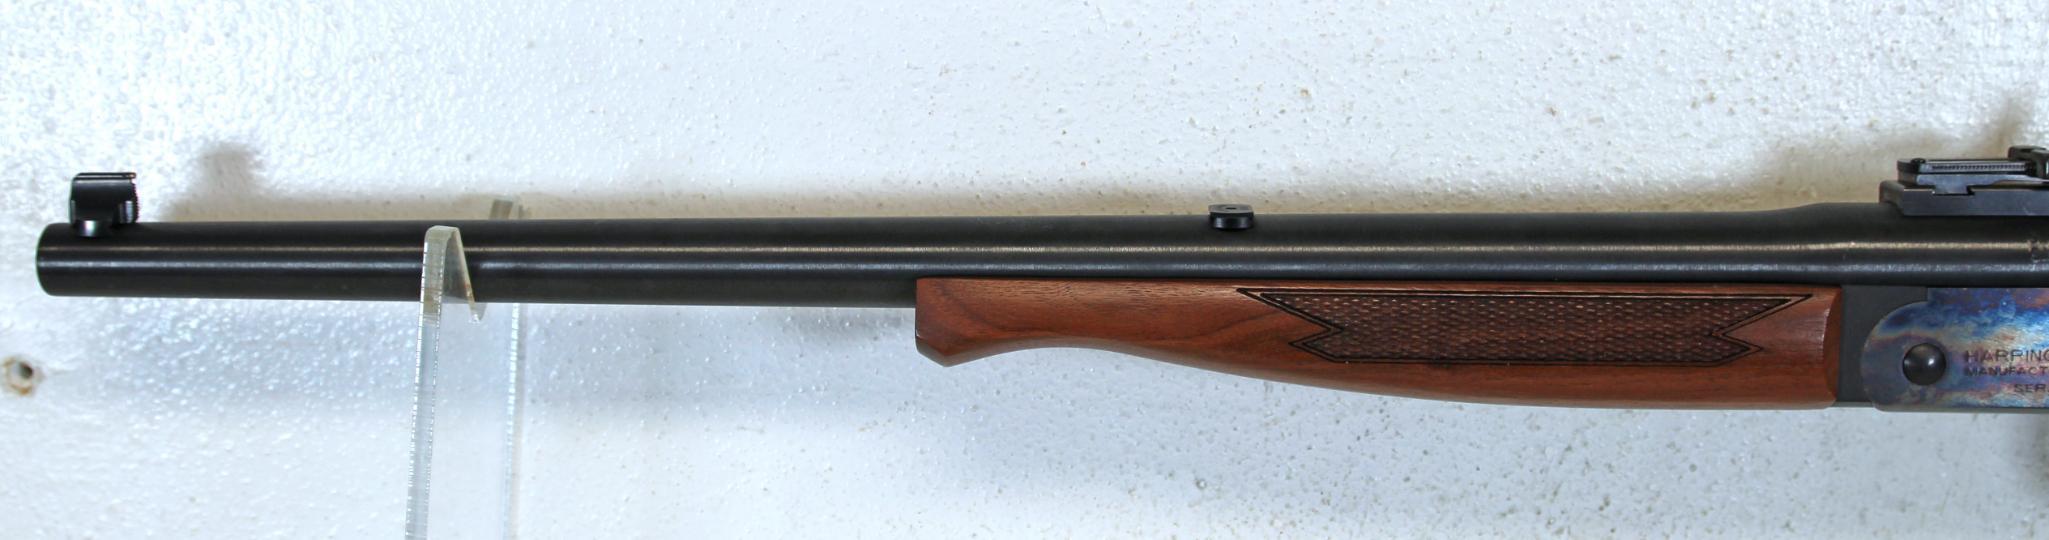 H&R Classic Carbine .45 Colt Single Shot Rifle 20" Barrel... SN#HX 323698...